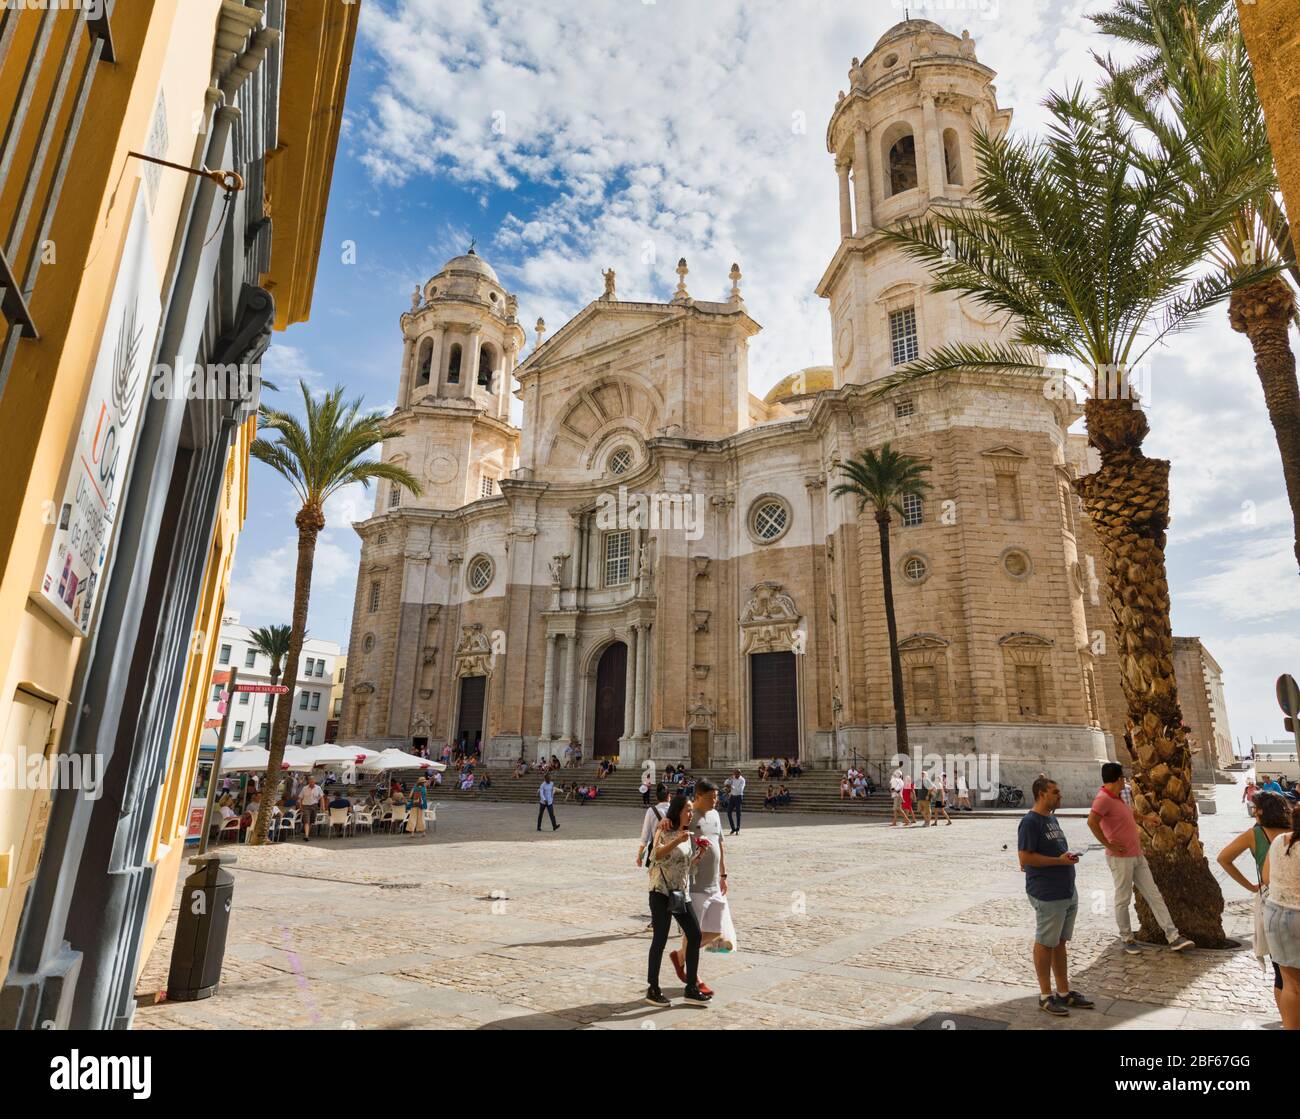 Die Kathedrale auf der Plaza de la Catedral, oder der Kathedralenplatz, Cadiz, Provinz Cadiz, Costa de la Luz, Andalusien, Spanien. Der offizielle Name der cathed Stockfoto